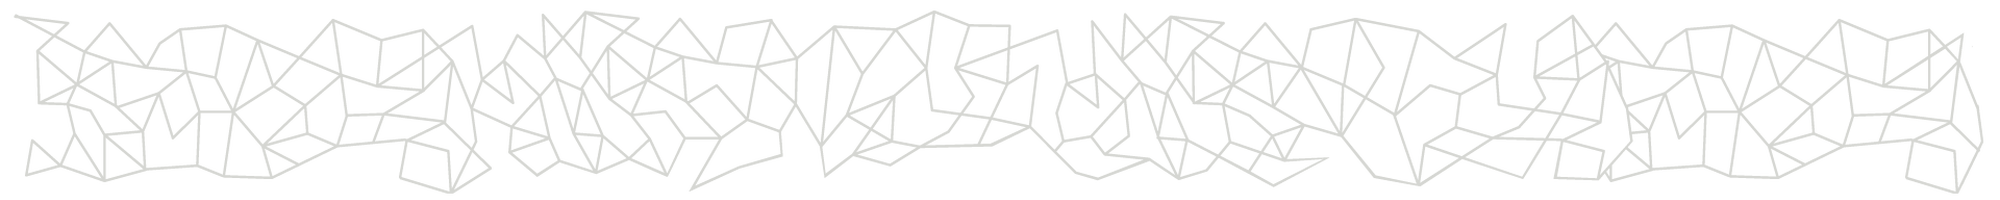 Decorative crystalline lace graphic.